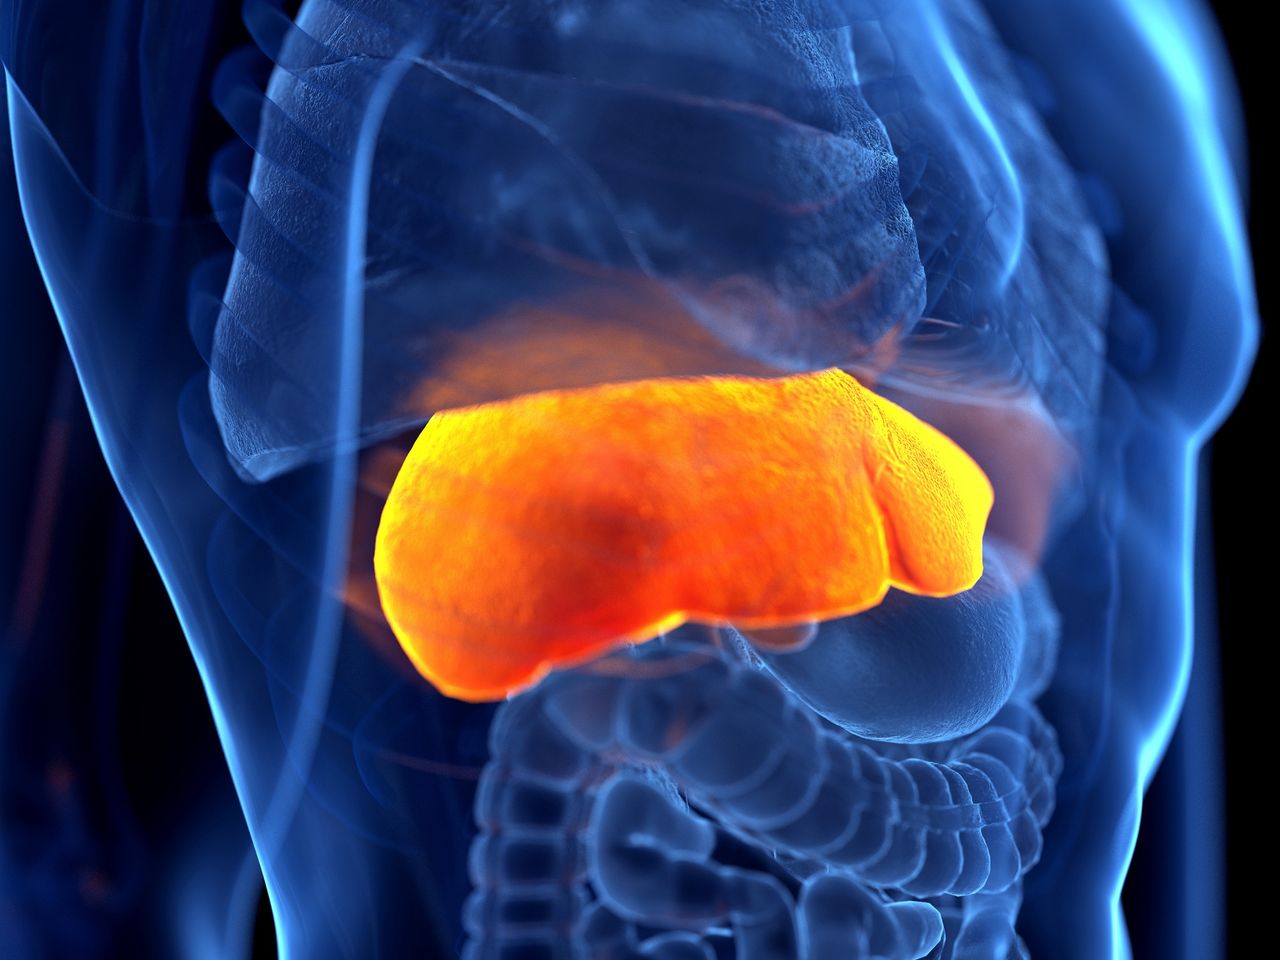 Boosting liver health. Essential roles of amino acids, choline, and vitamin C